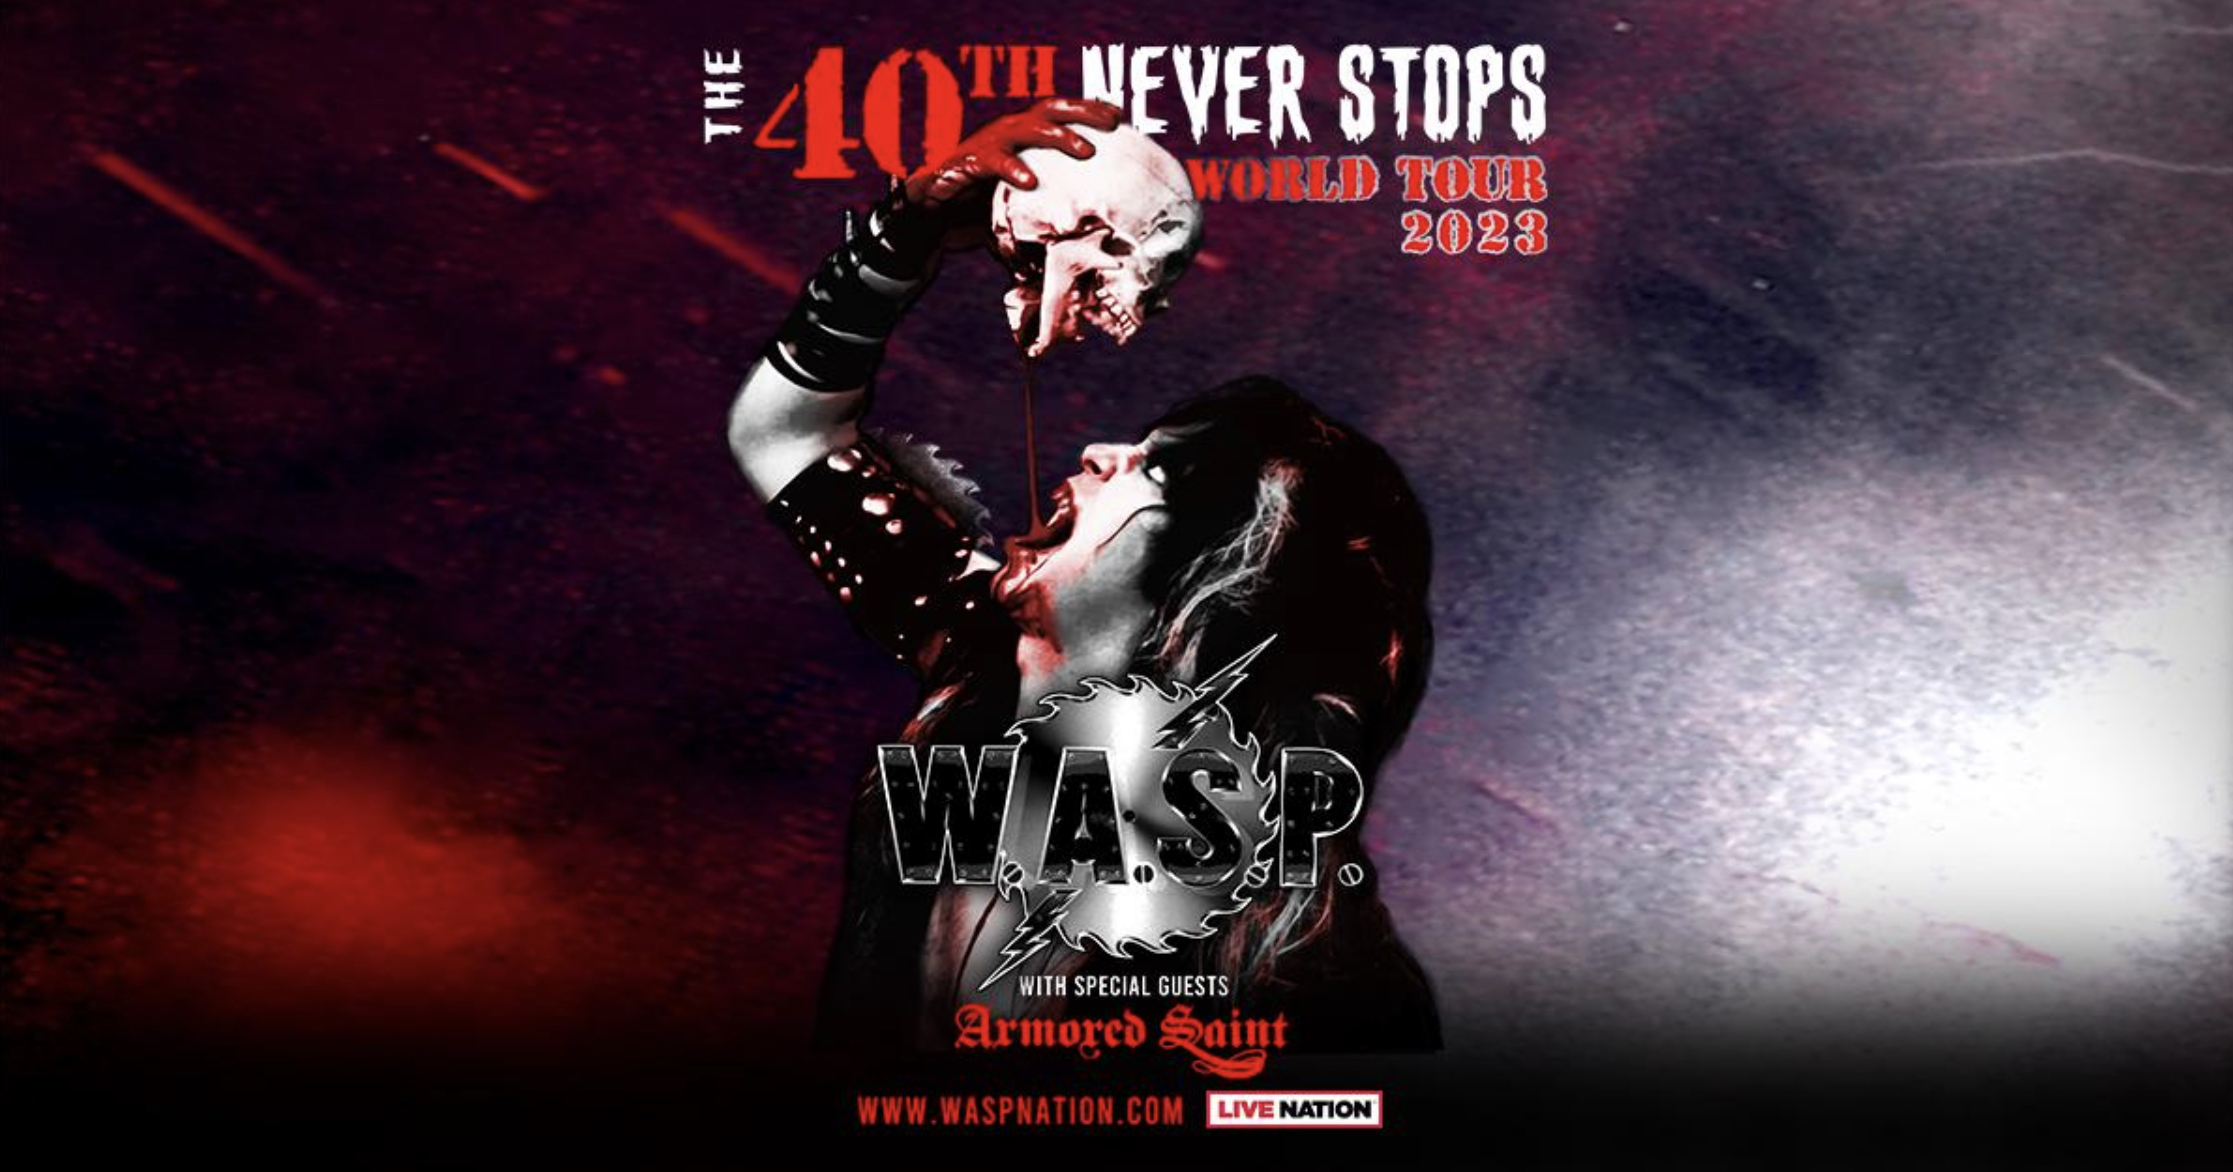 W.A.S.P. ANNOUNCES THE 40TH NEVER STOPS WORLD TOUR 2023 US DATES